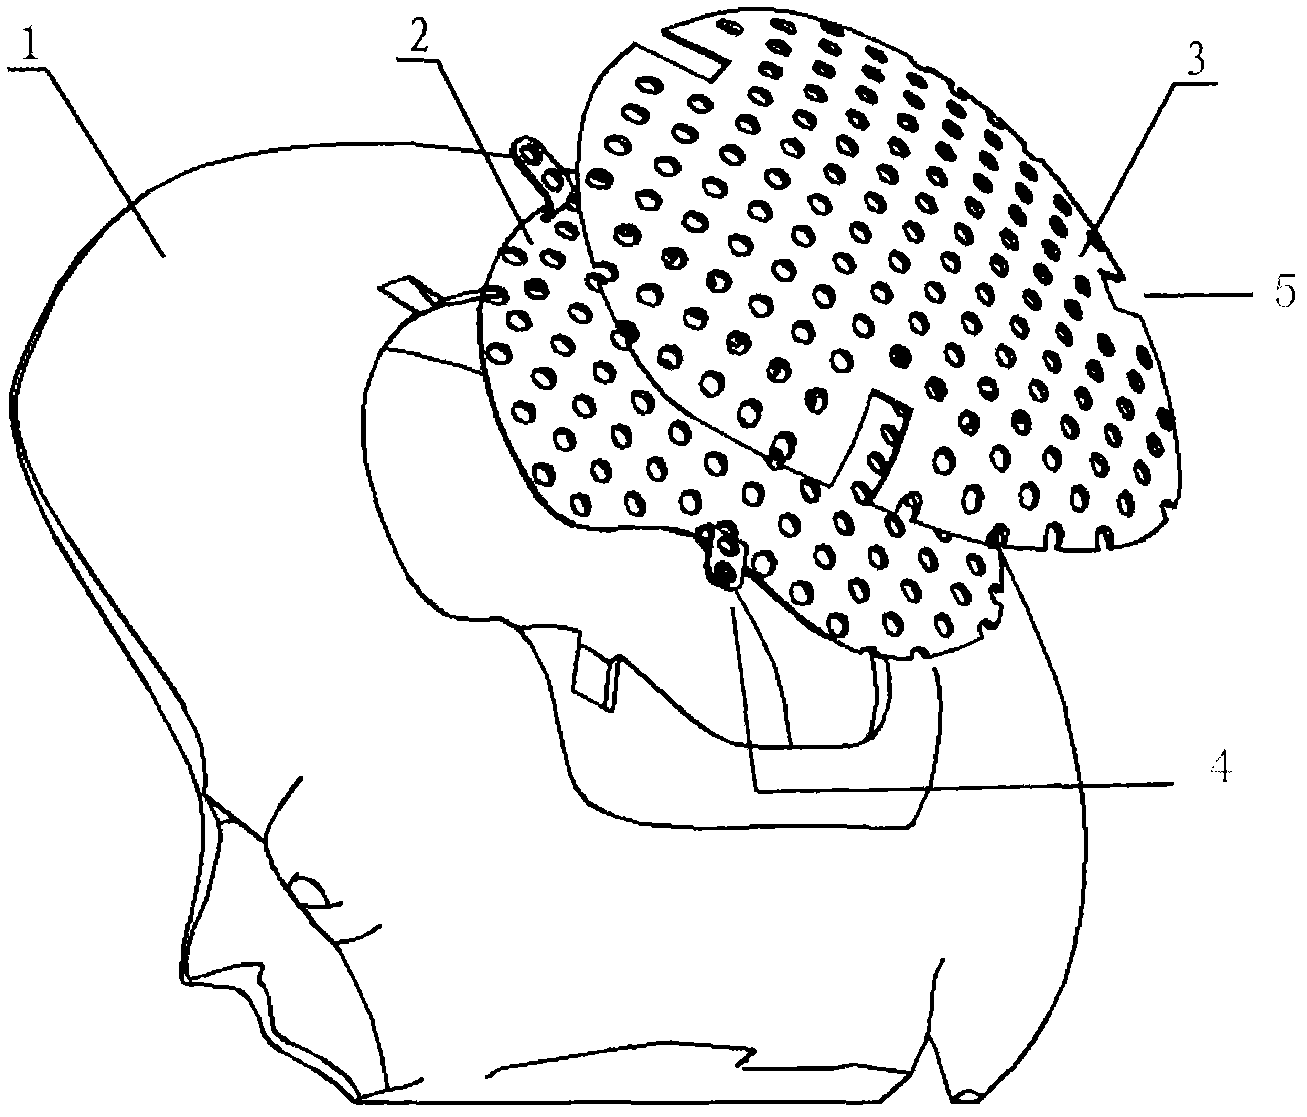 Double-layer titanium mesh for cranioplasty